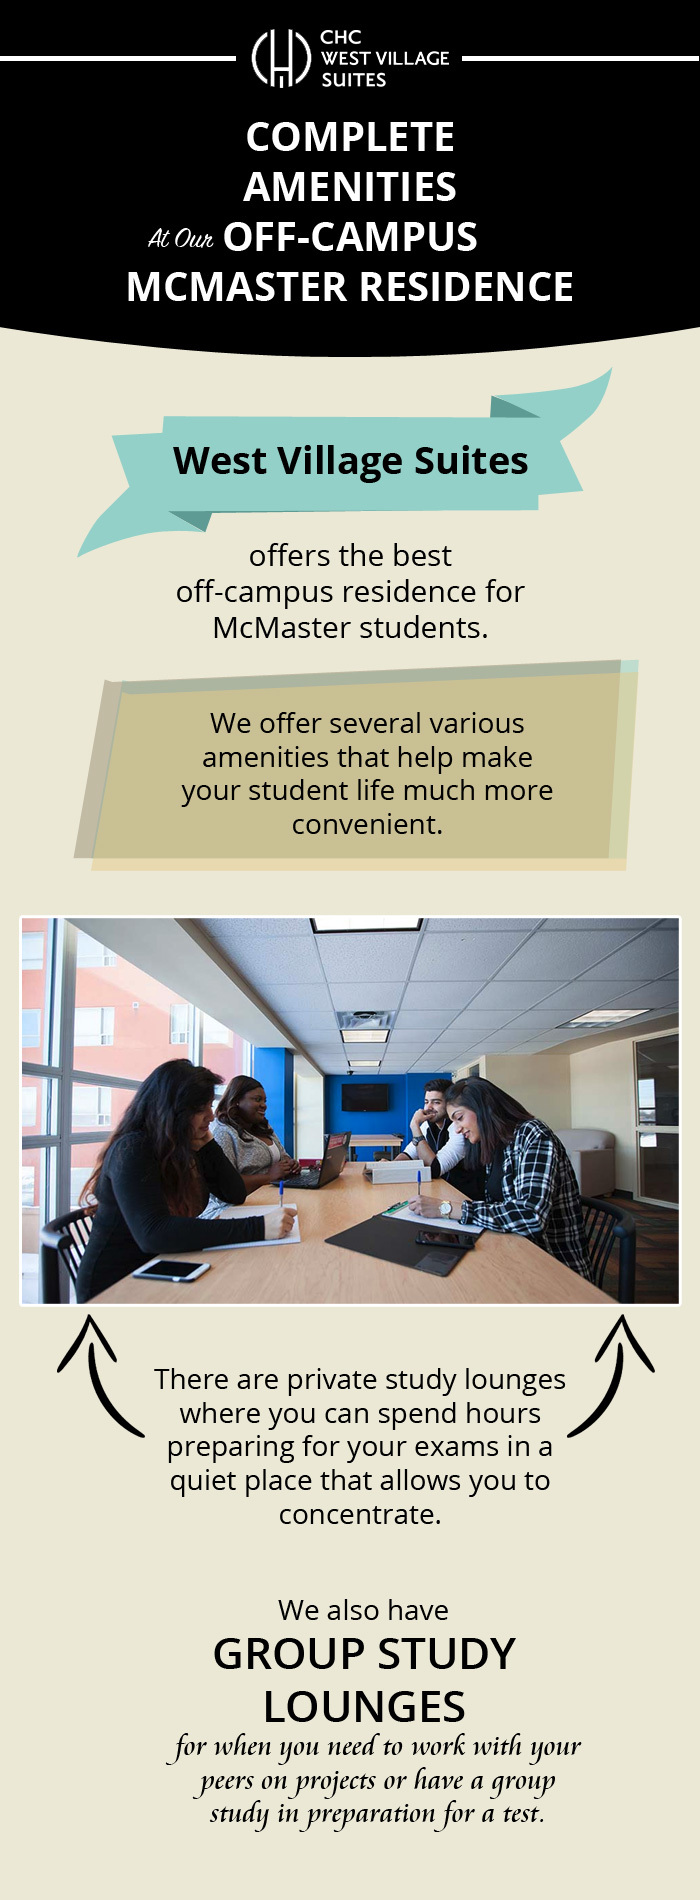 Choose West Village Suites for Premium Student Housing near McMaster University